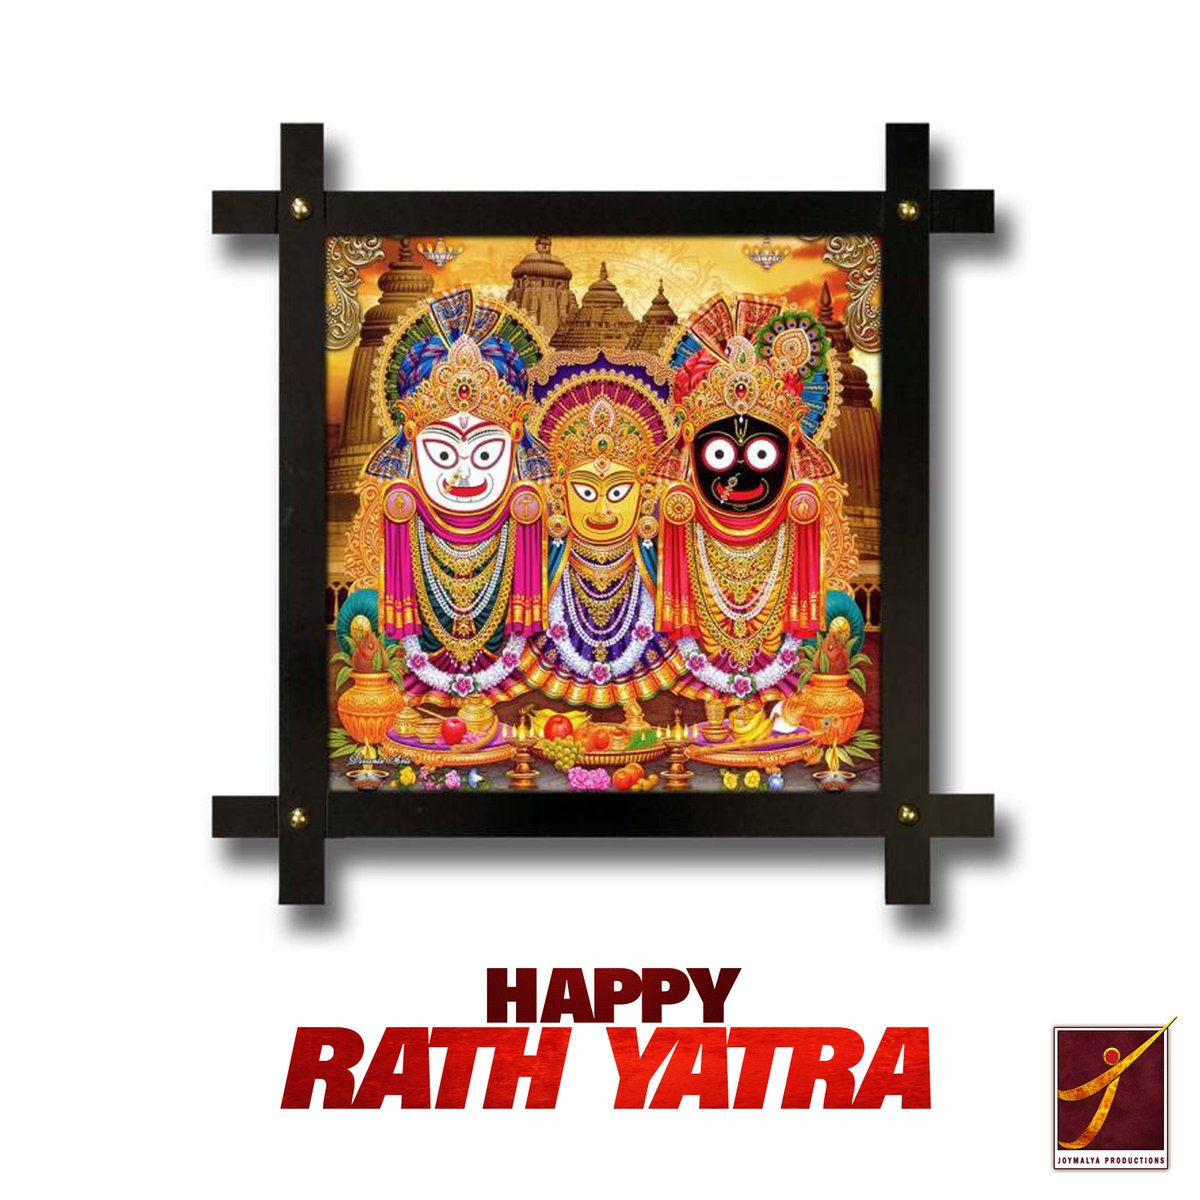 May Lord Jagannath bless you with good times and prosperity, 
Happy Rath Yatra 2020.

#rathyatra #happyrathyatra #rathyatra2020 #happyrathyatra2020 #joymalyaproductions #joymalyasaha #joymalya #saha #onestop #rarecollections #viralvideos #informativevideos